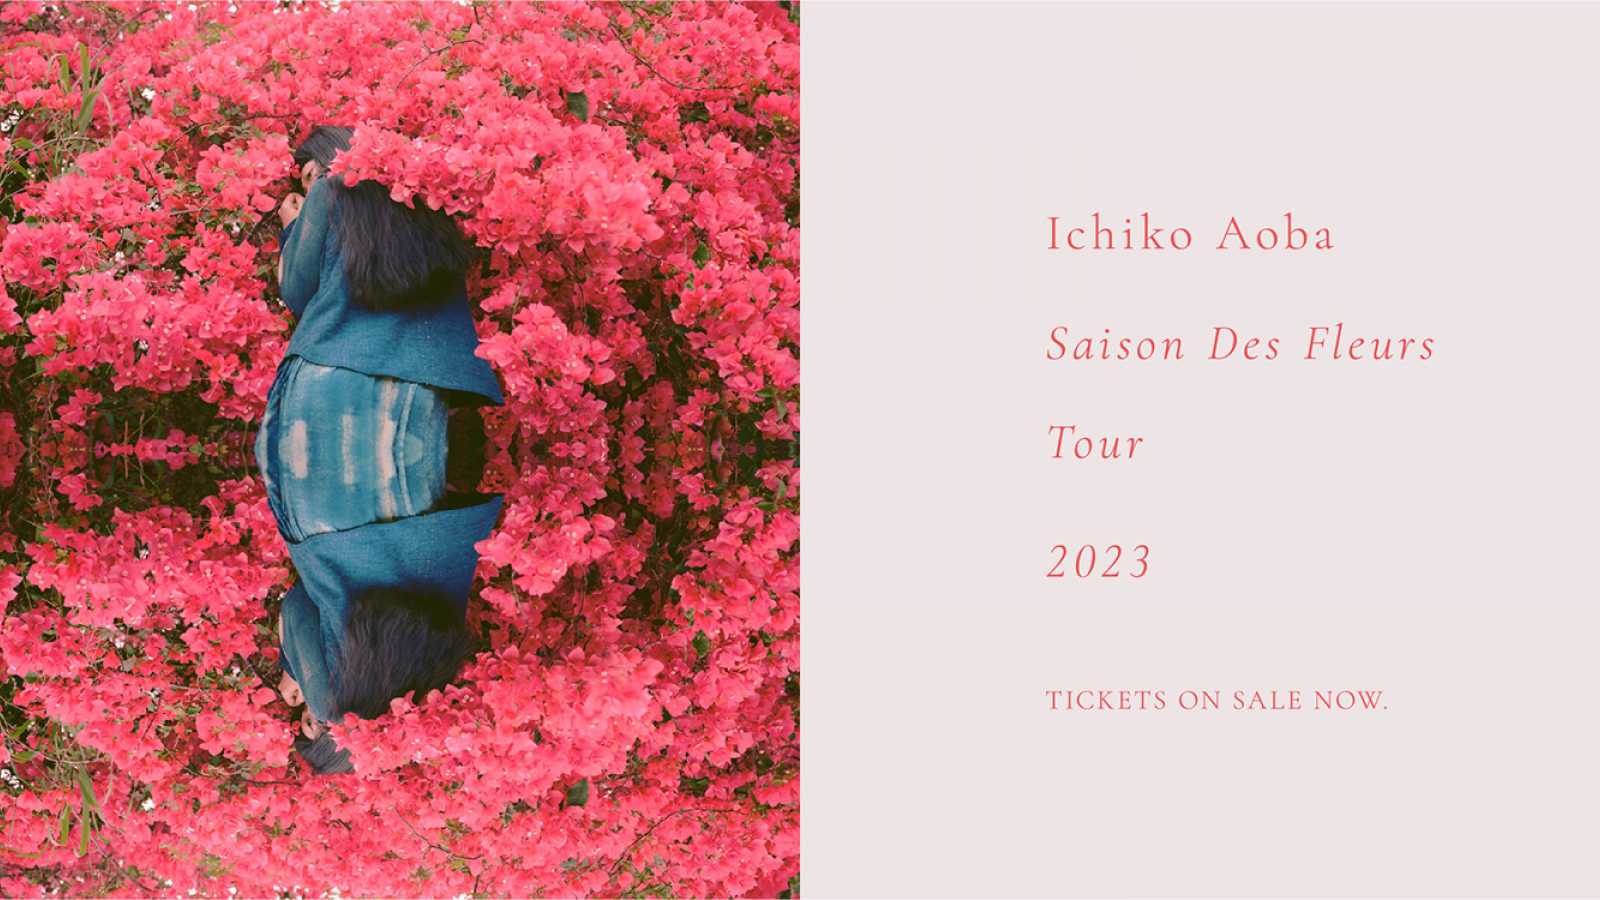 Ichiko Aoba to Tour UK, Ireland and Australia © Ichiko Aoba. All rights reserved.